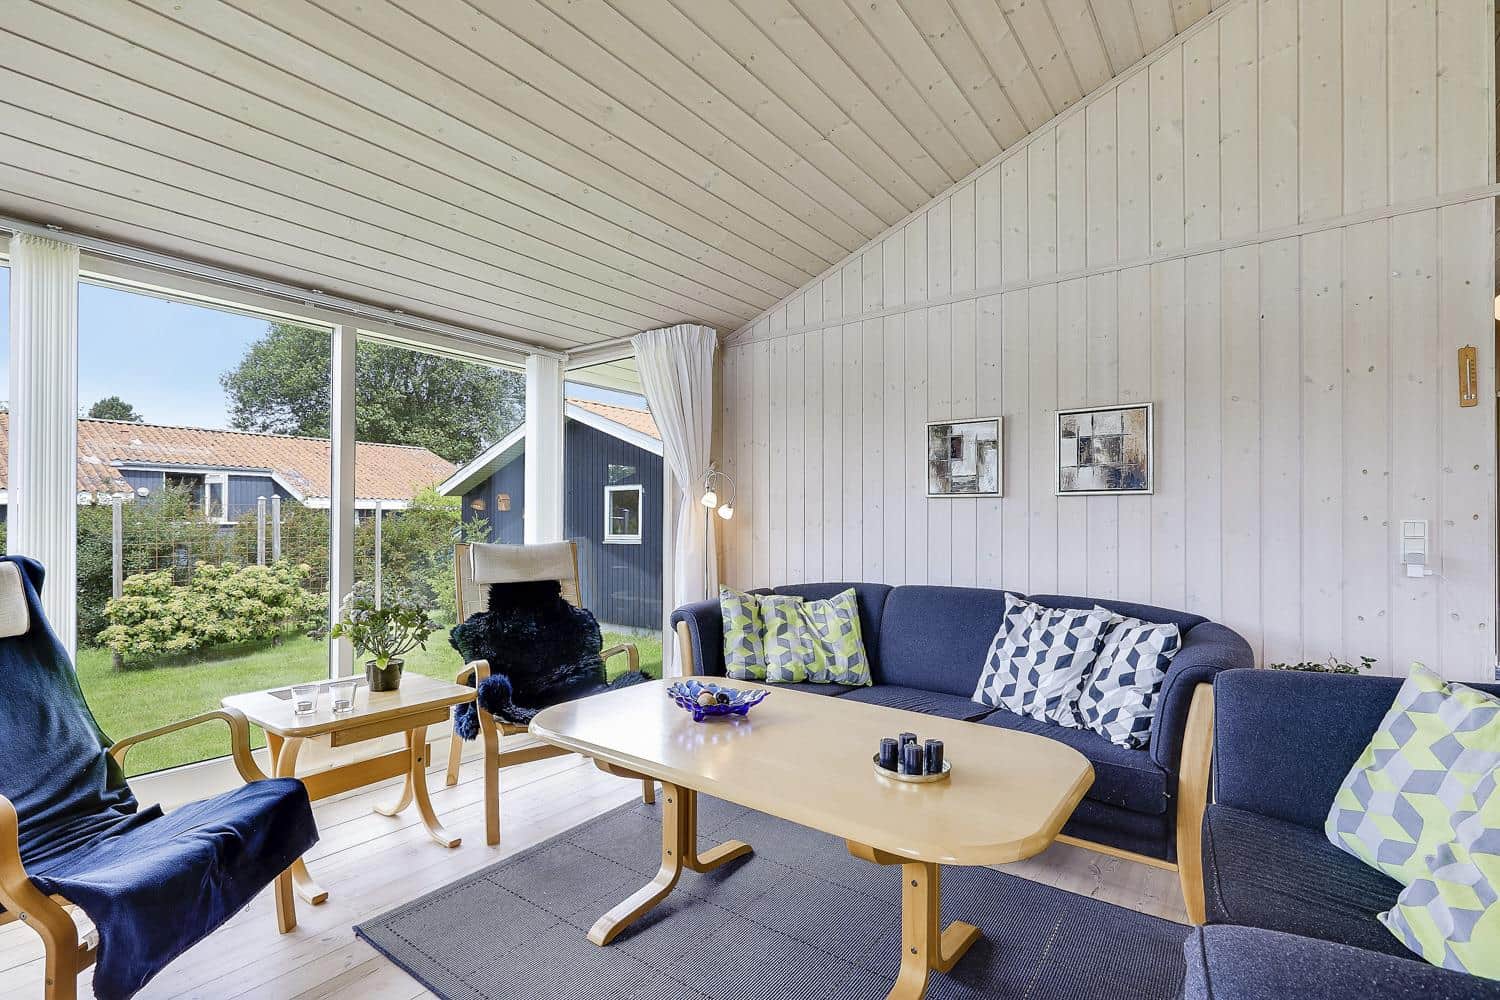 Livingroom 1 Image 3-19 Holiday-home 40509, Pøt Strandby 148, DK - 7130 Juelsminde